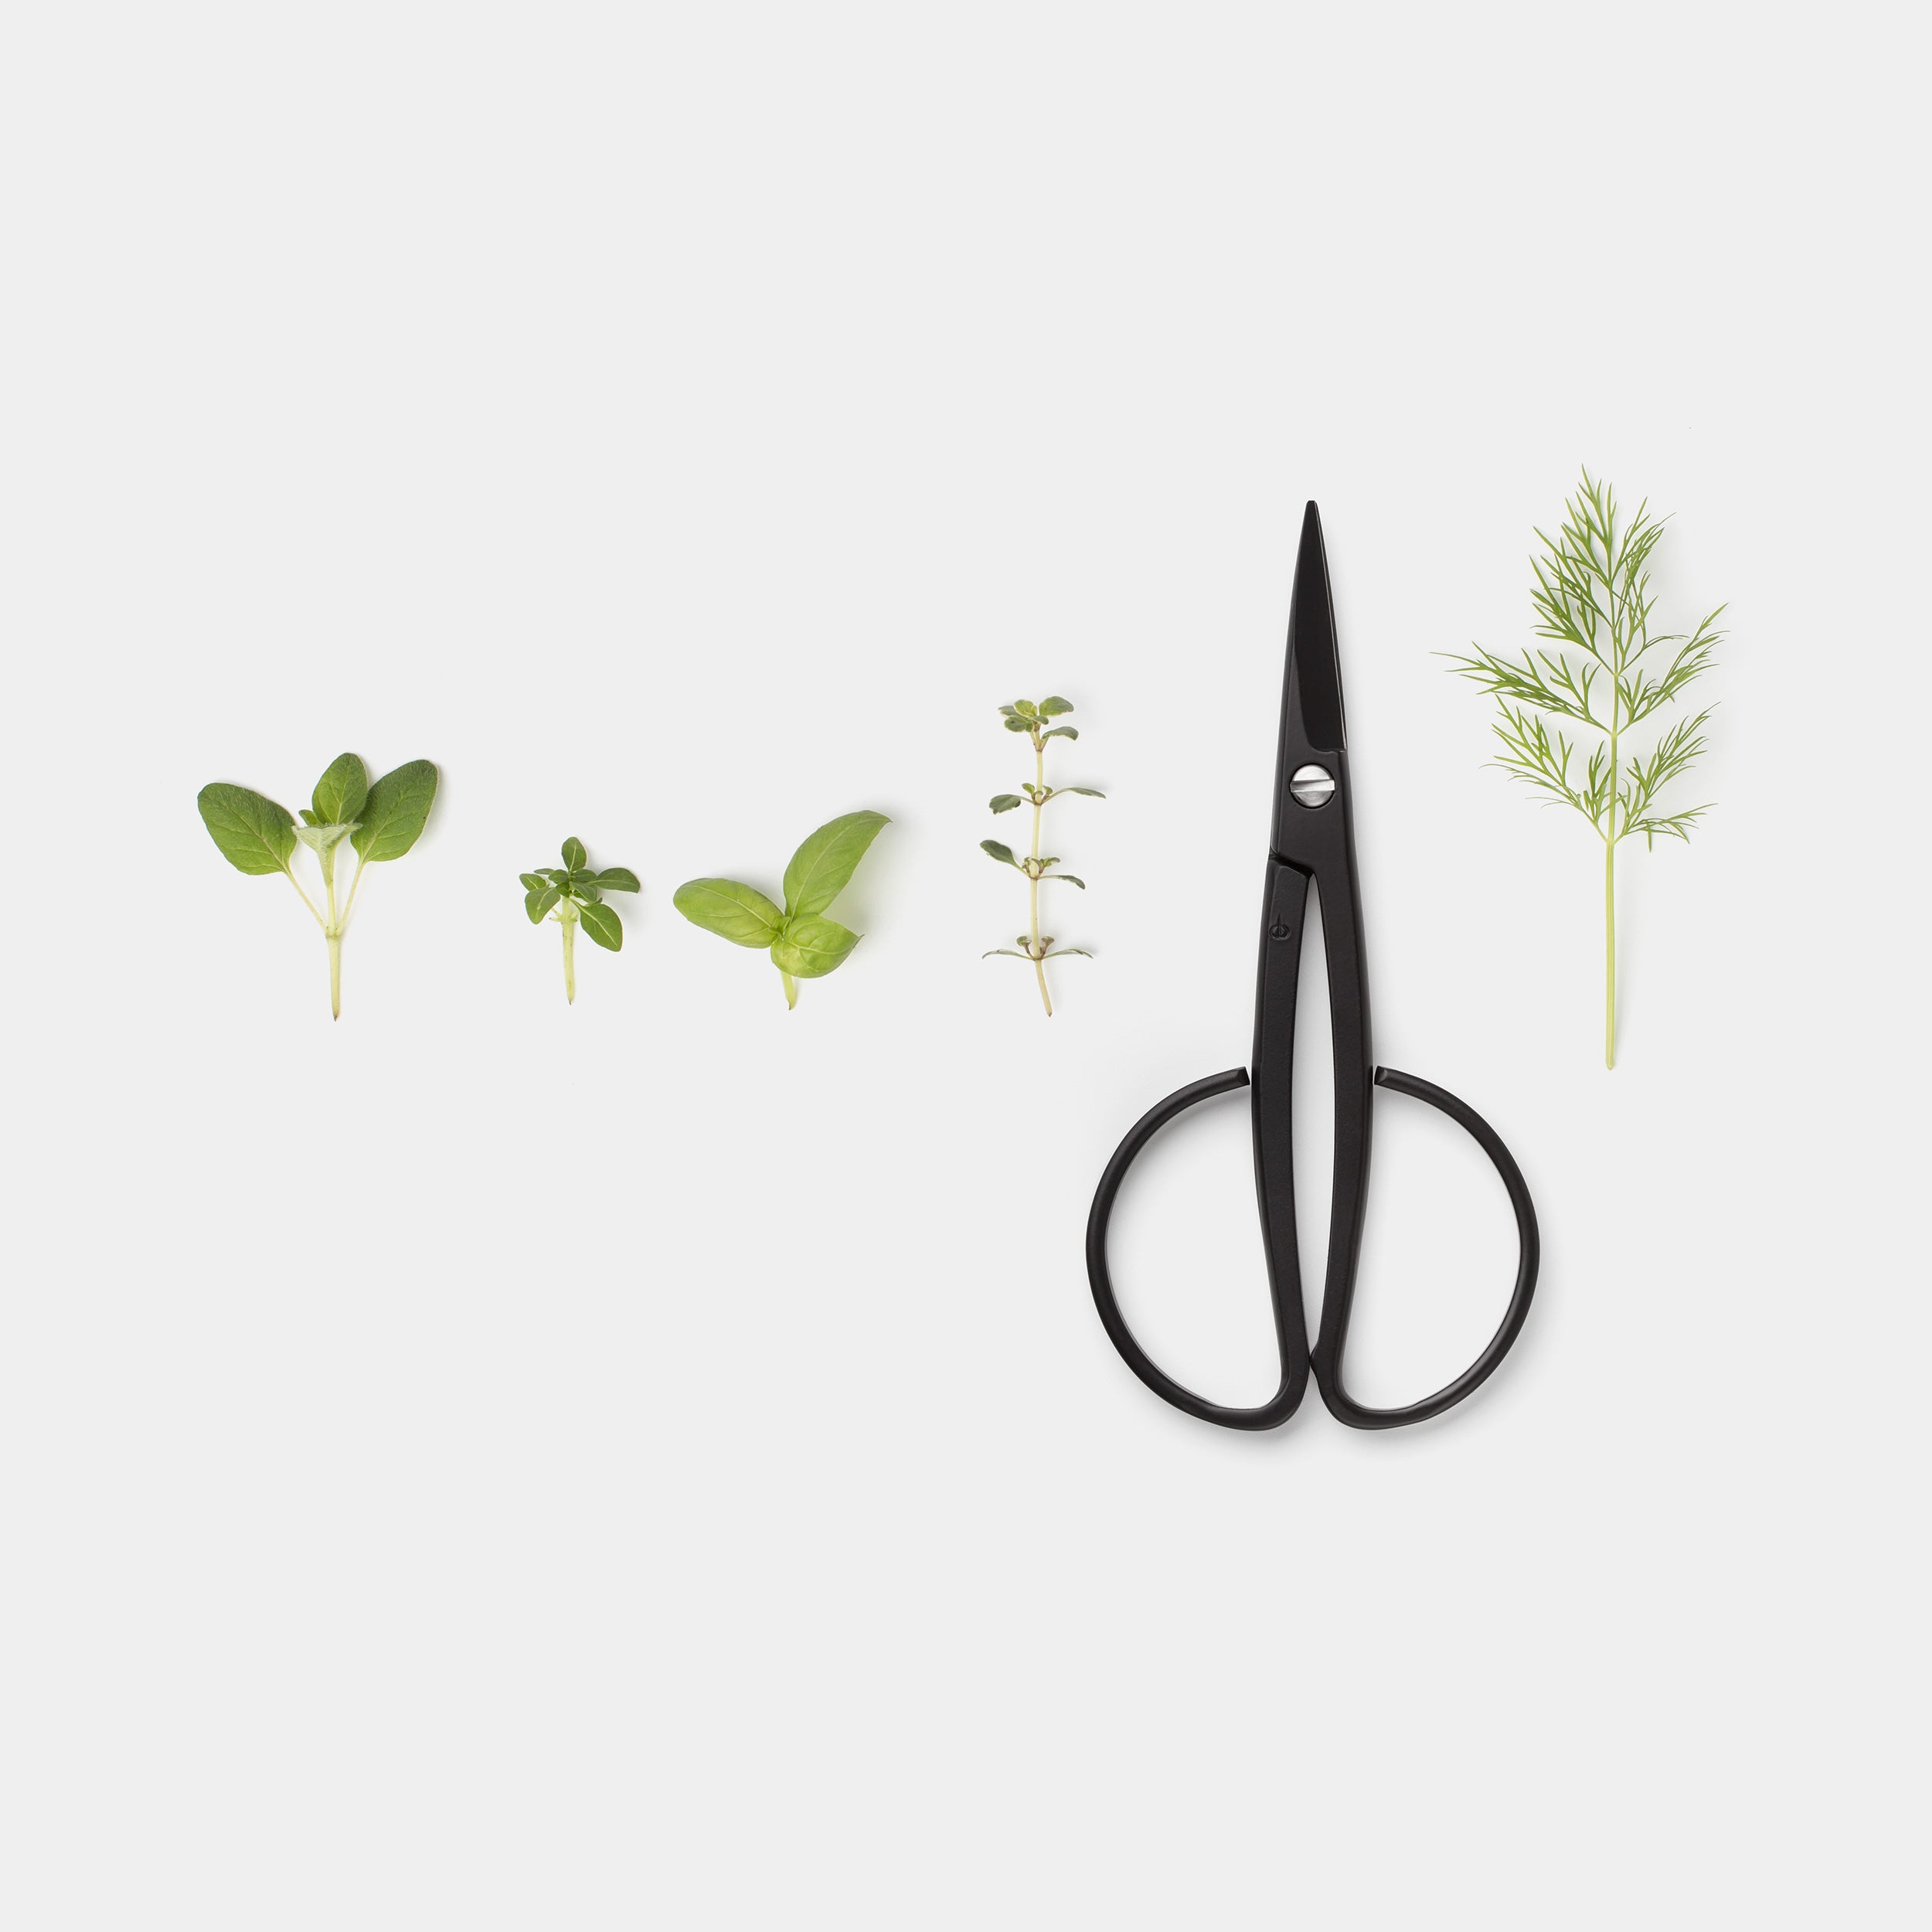 Kobayashi Harvester Scissors with Herbs